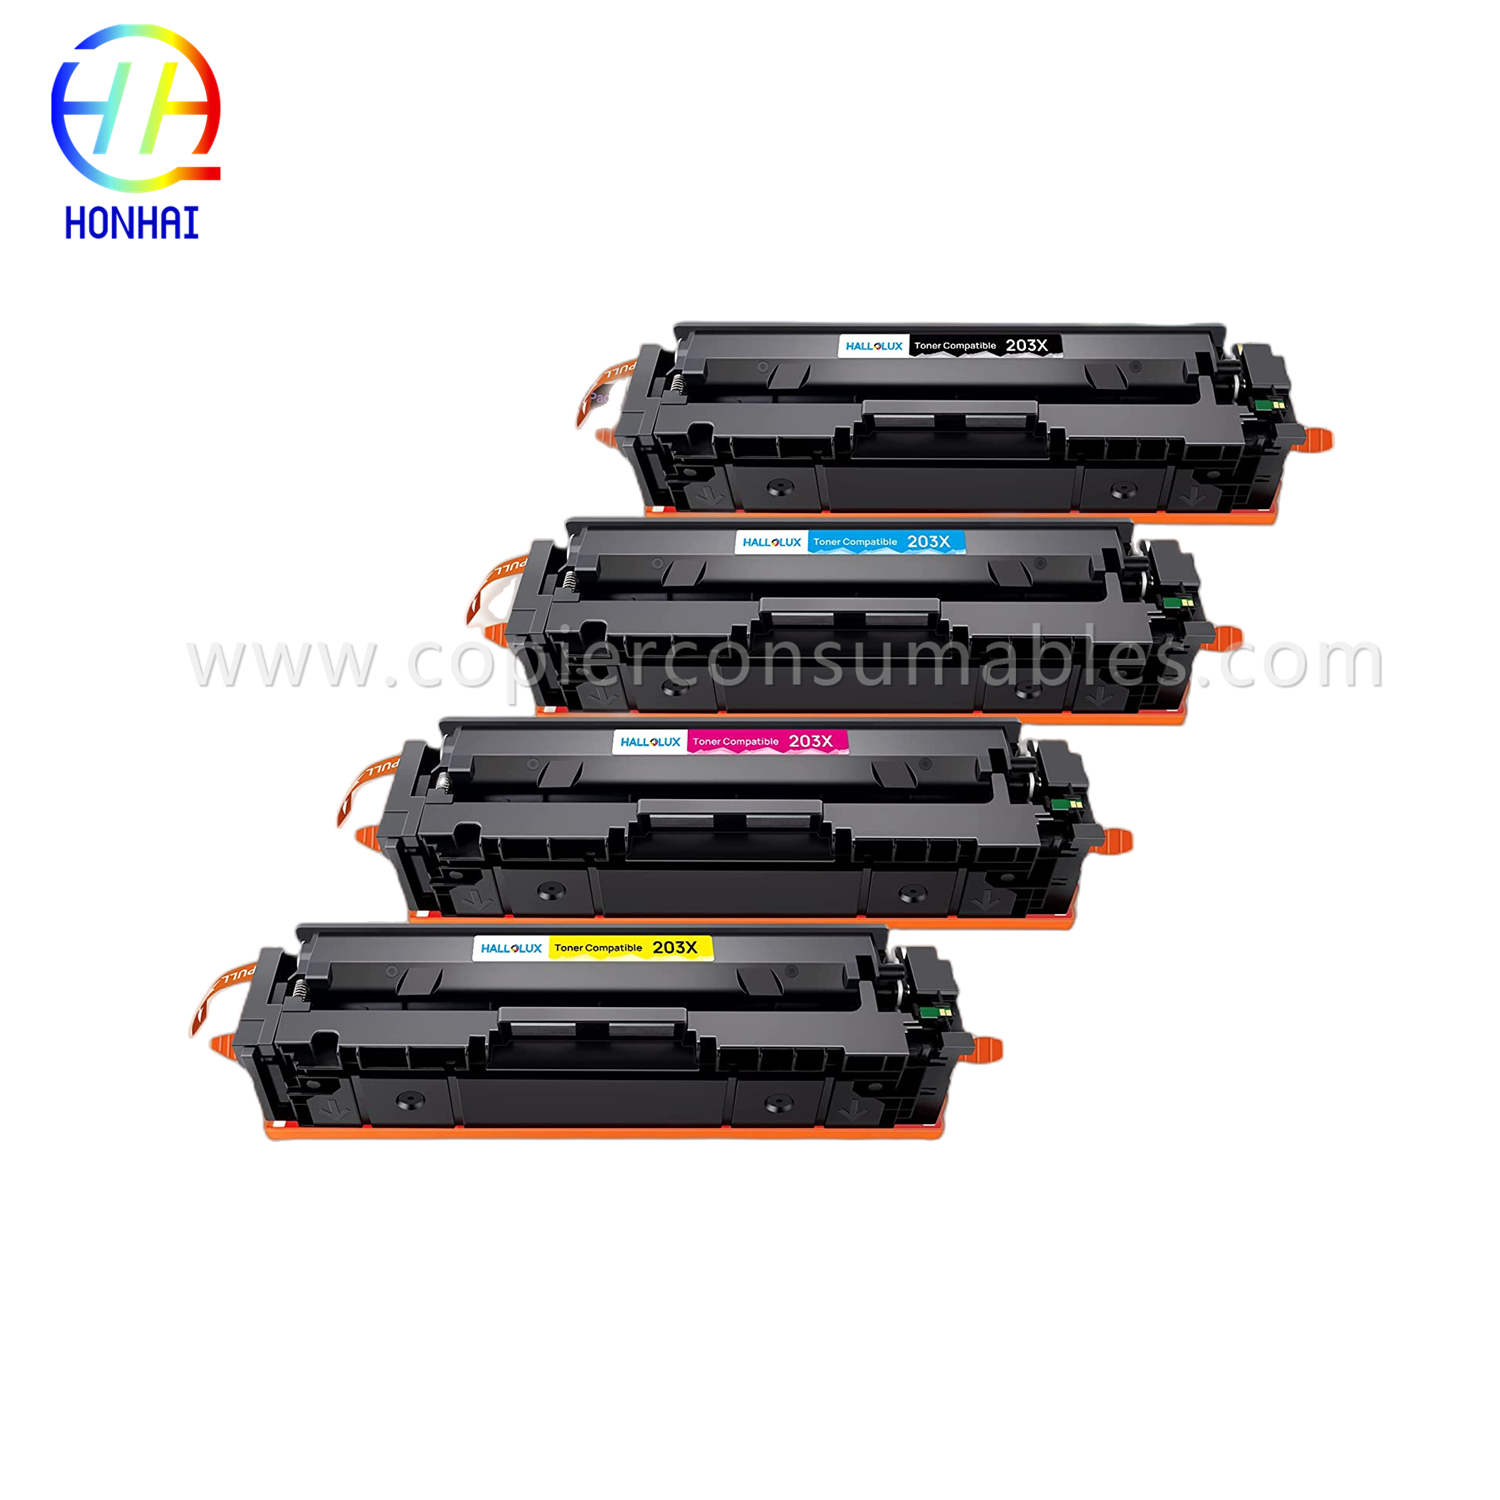 https://www.copierhonhaitech.com/toner-cartridge-for-hp-colour-laserjet-pro-m254dn-m254dw-m254nw-m280nw-m281cdw-m281fdn-m281fdw-203a-cf543a/